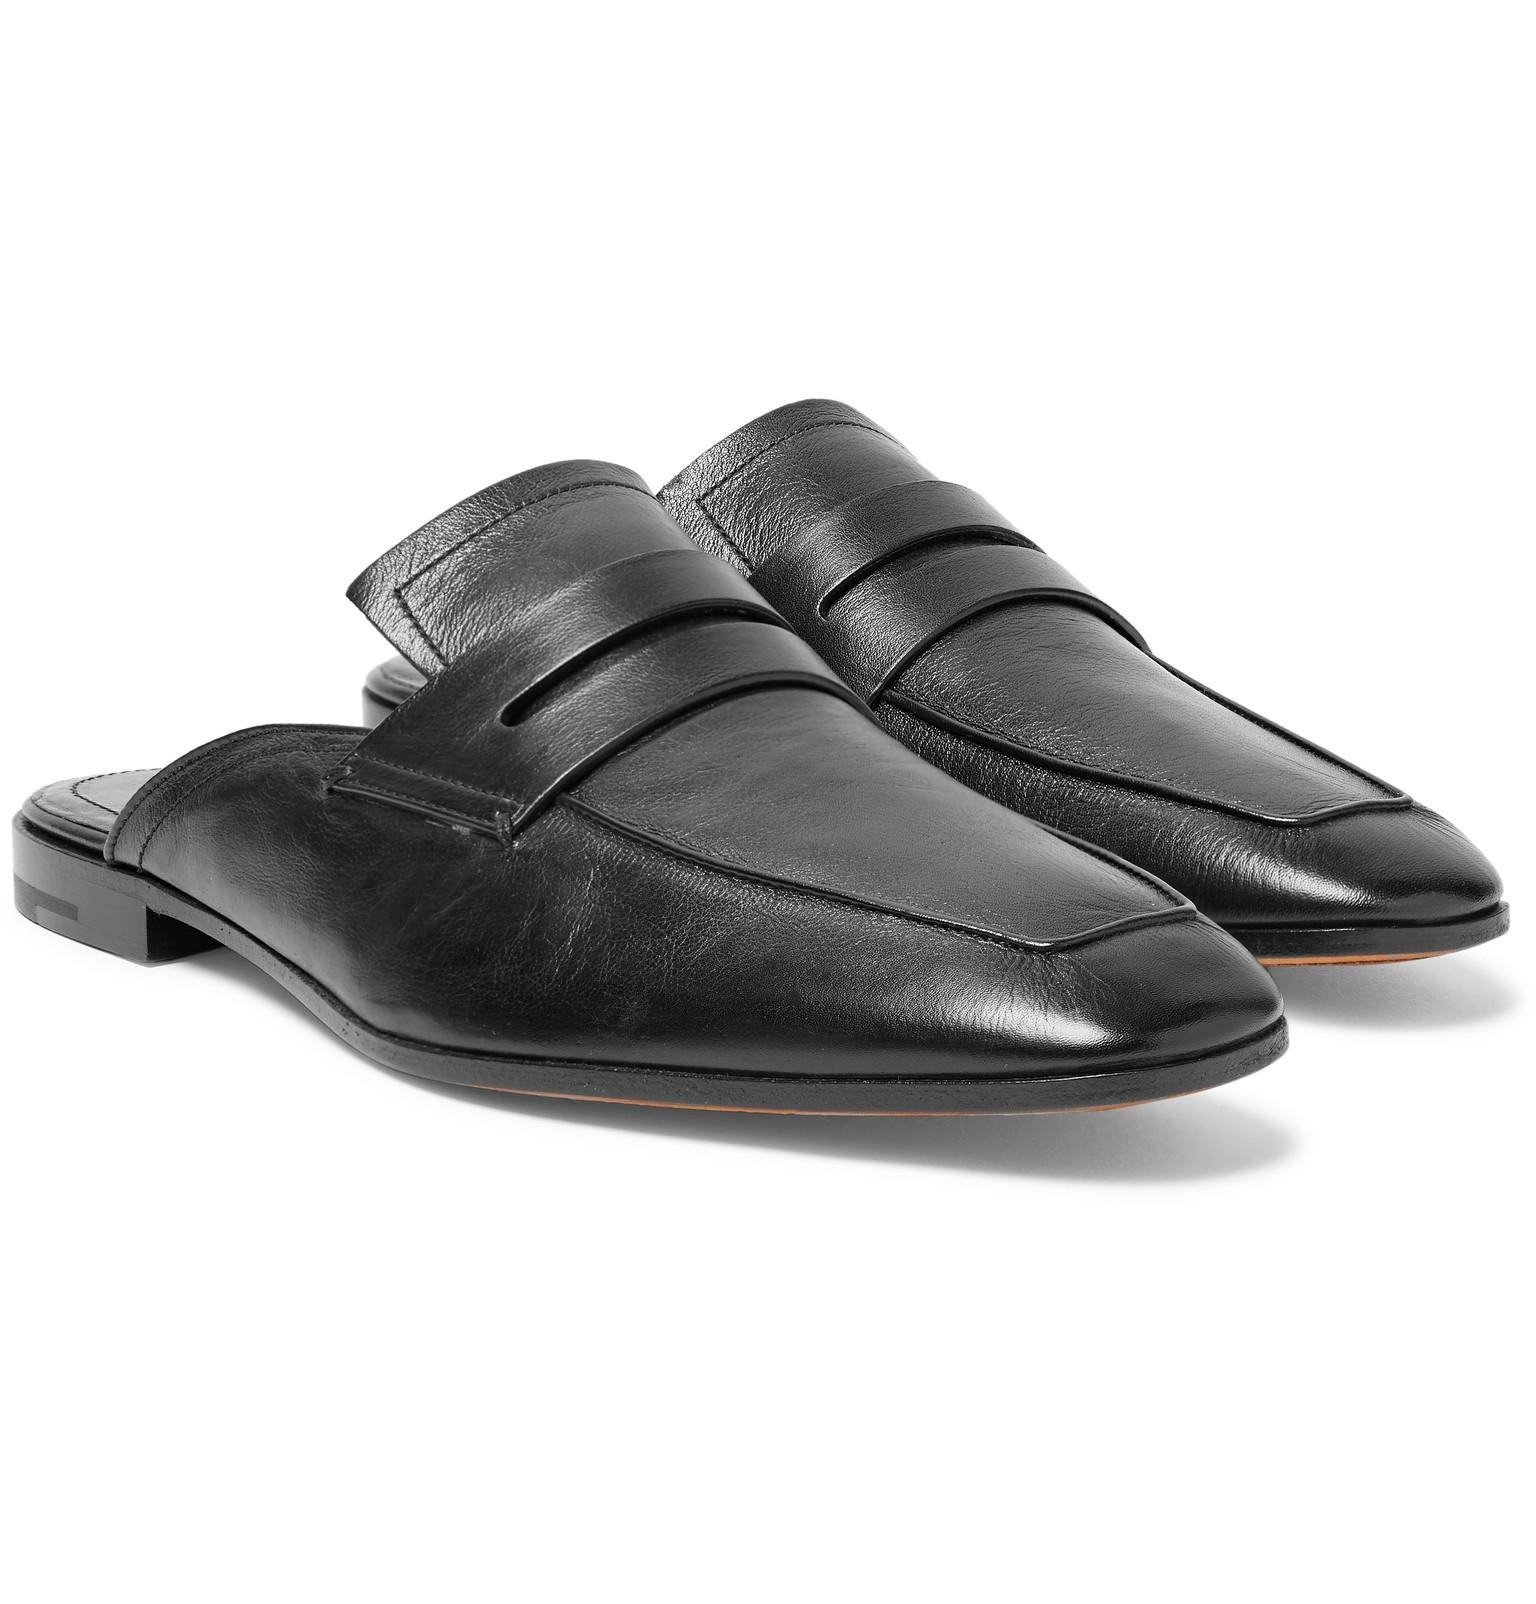 Berluti Lorenzo Rimini Leather Backless Loafers in Black for Men - Lyst